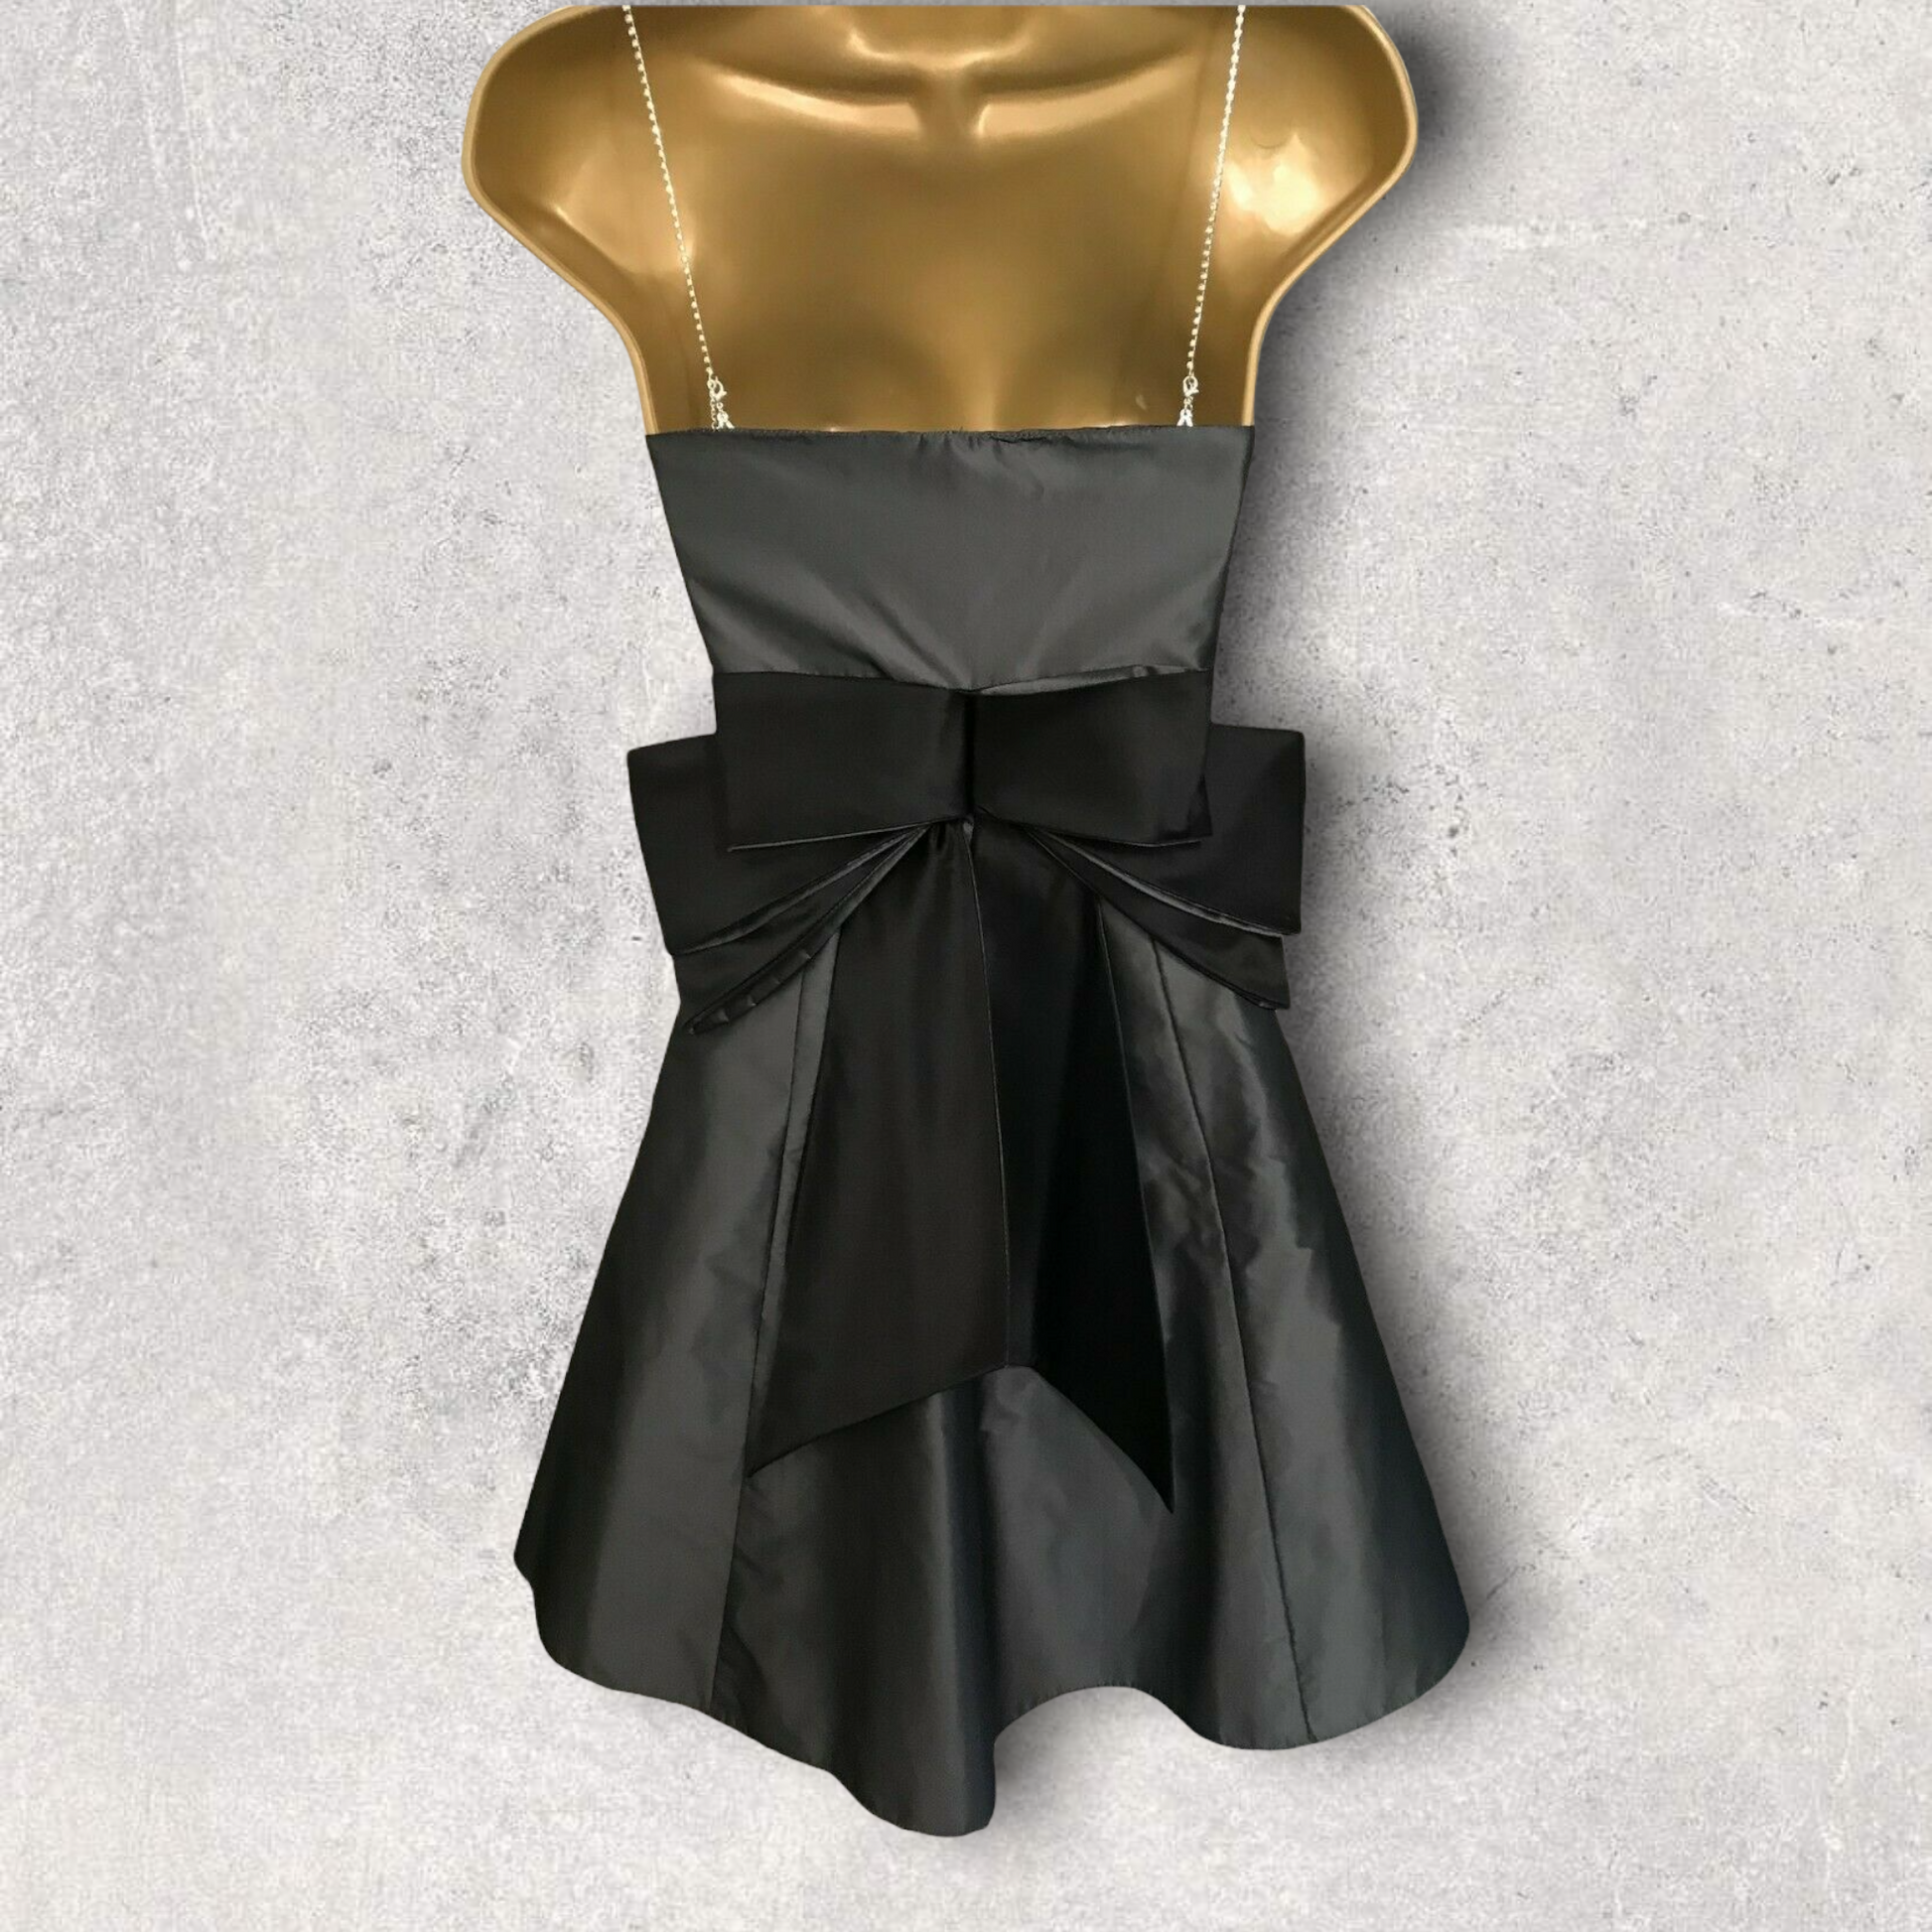 Karen Millen Grey Taffeta Black Bow Fit & Flare Party Dress UK 10 US 6 EU 38 Timeless Fashions